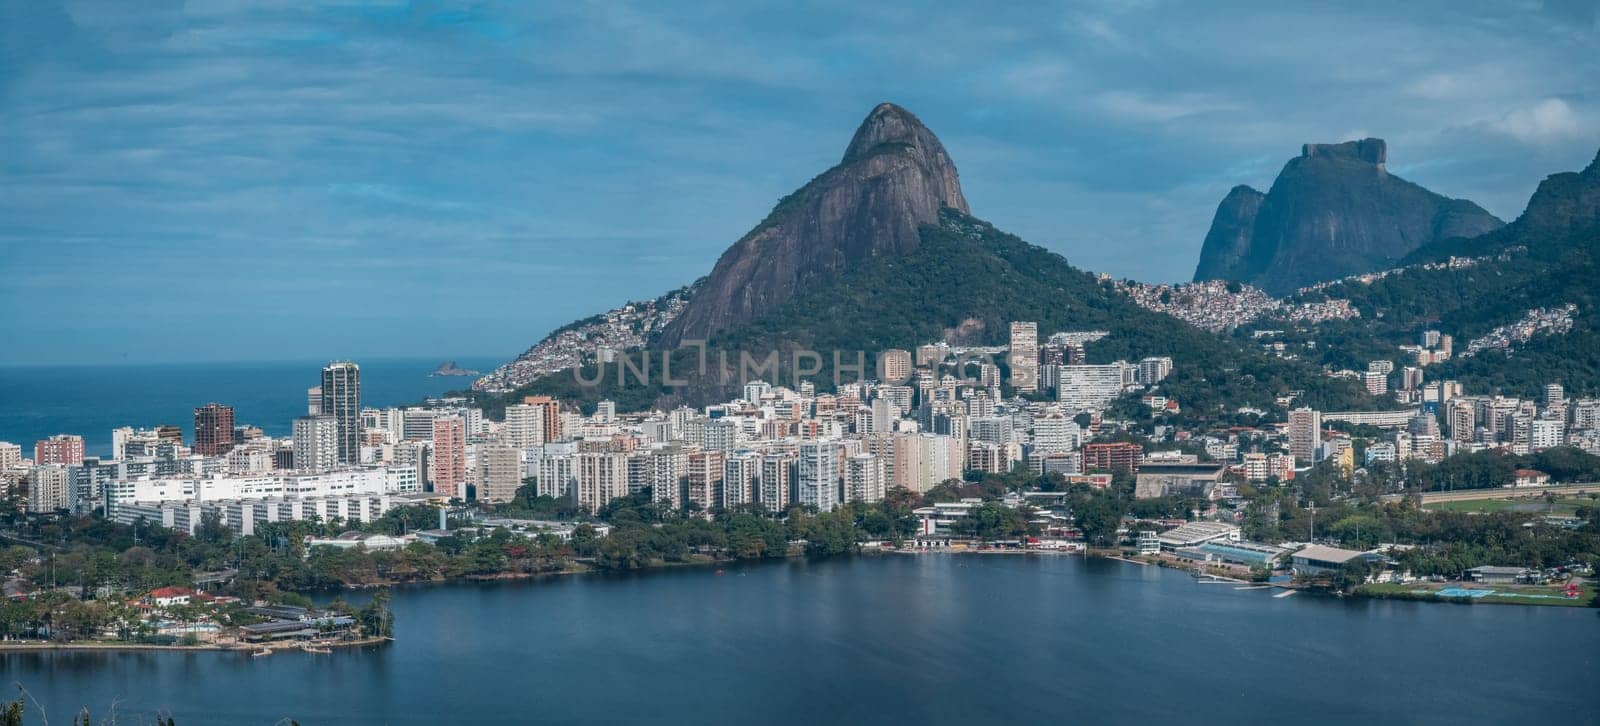 Rio de Janeiro s Diverse Skyline Overlooking Lush Mountain and Favelas by FerradalFCG